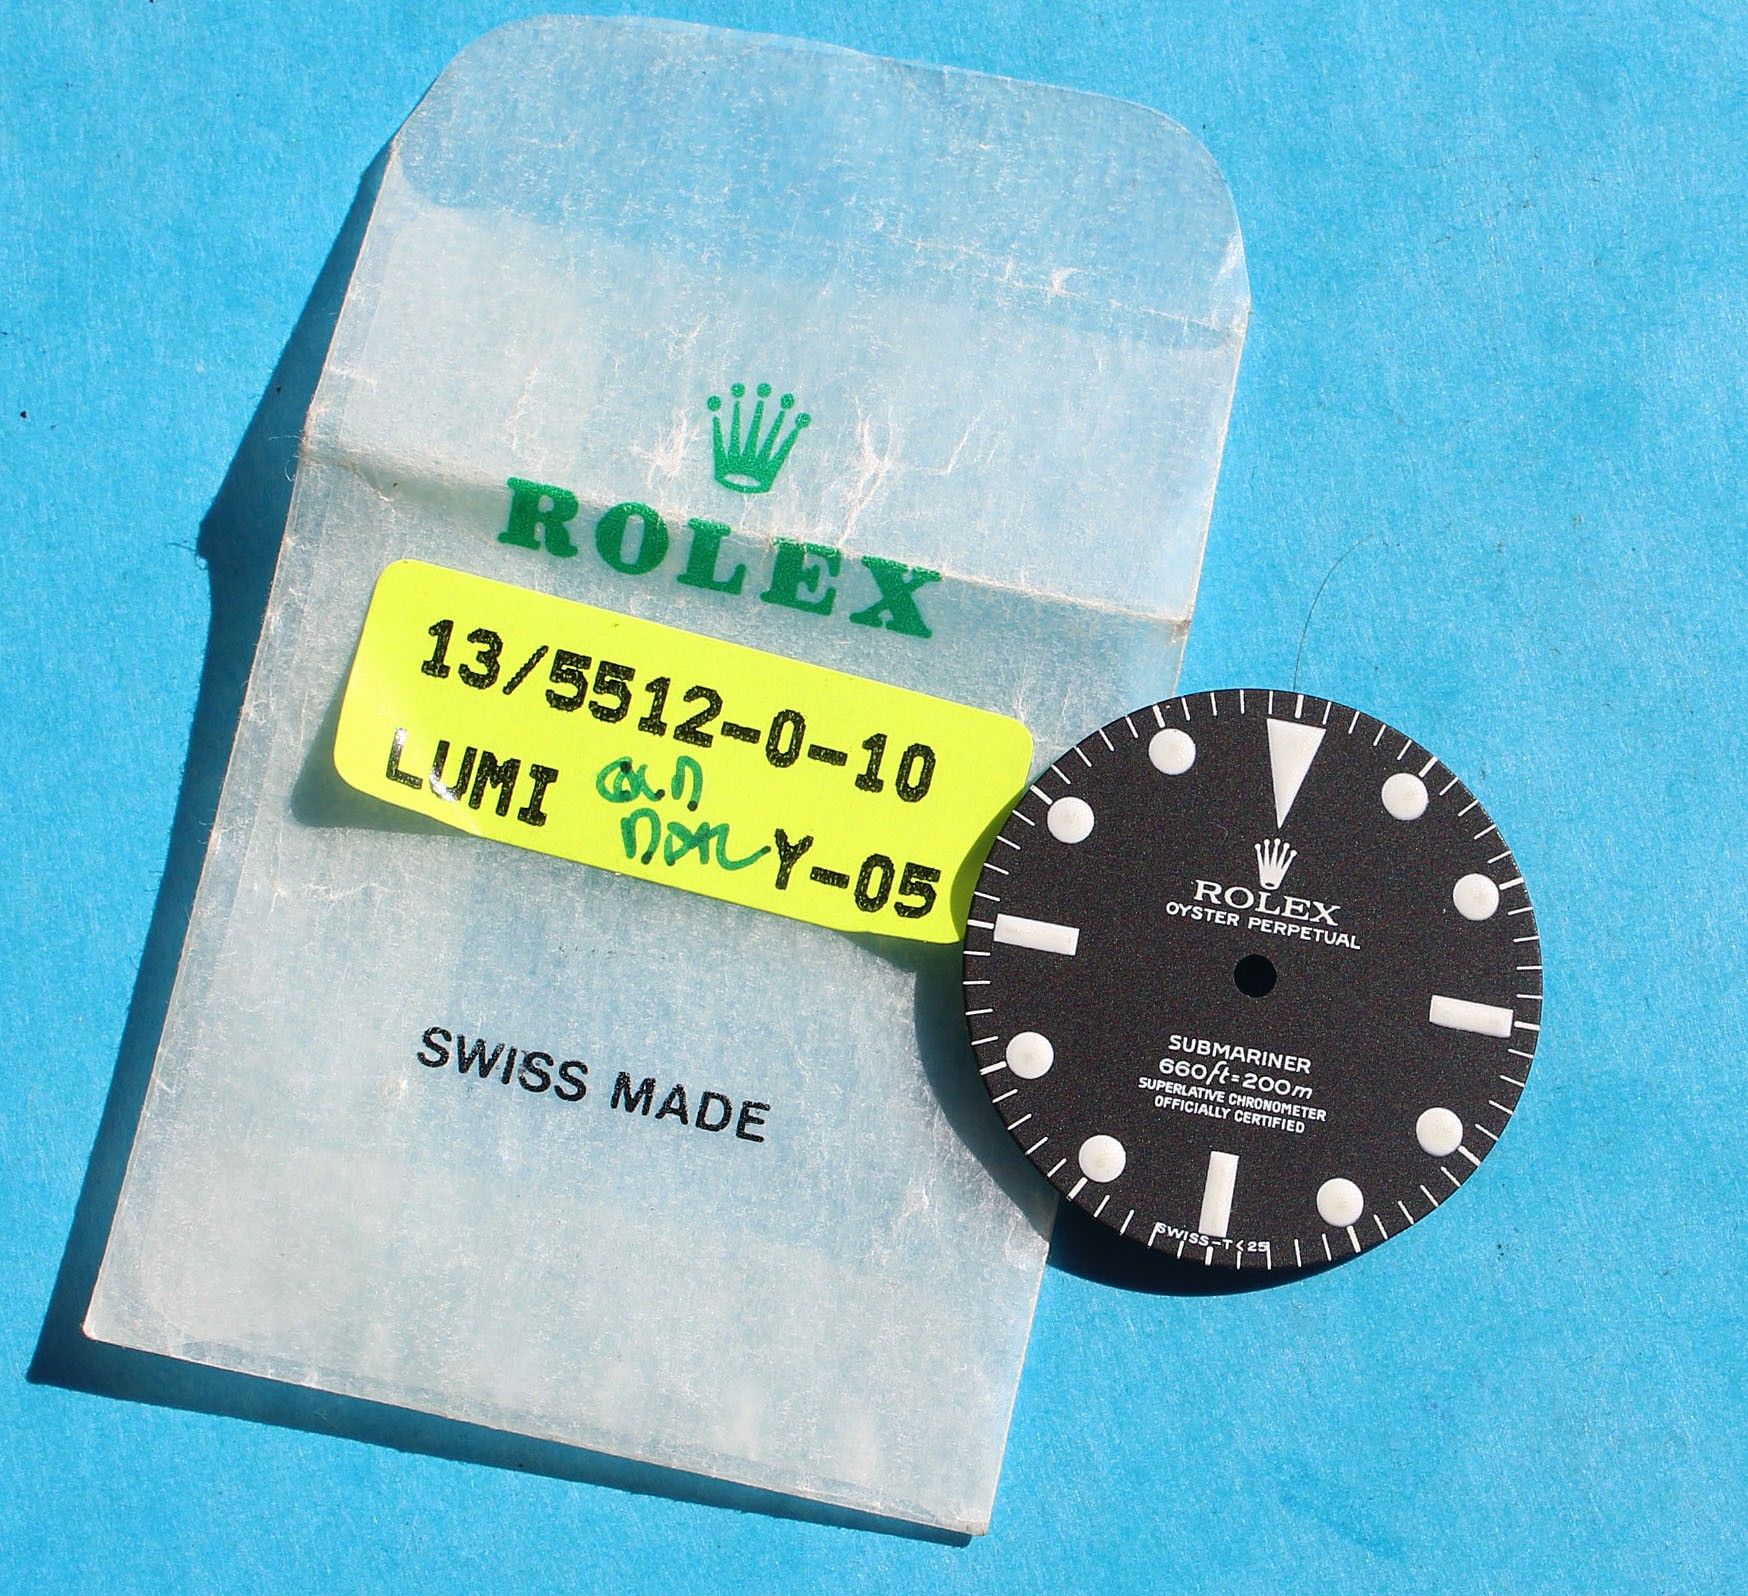 rolex 5512 service dial